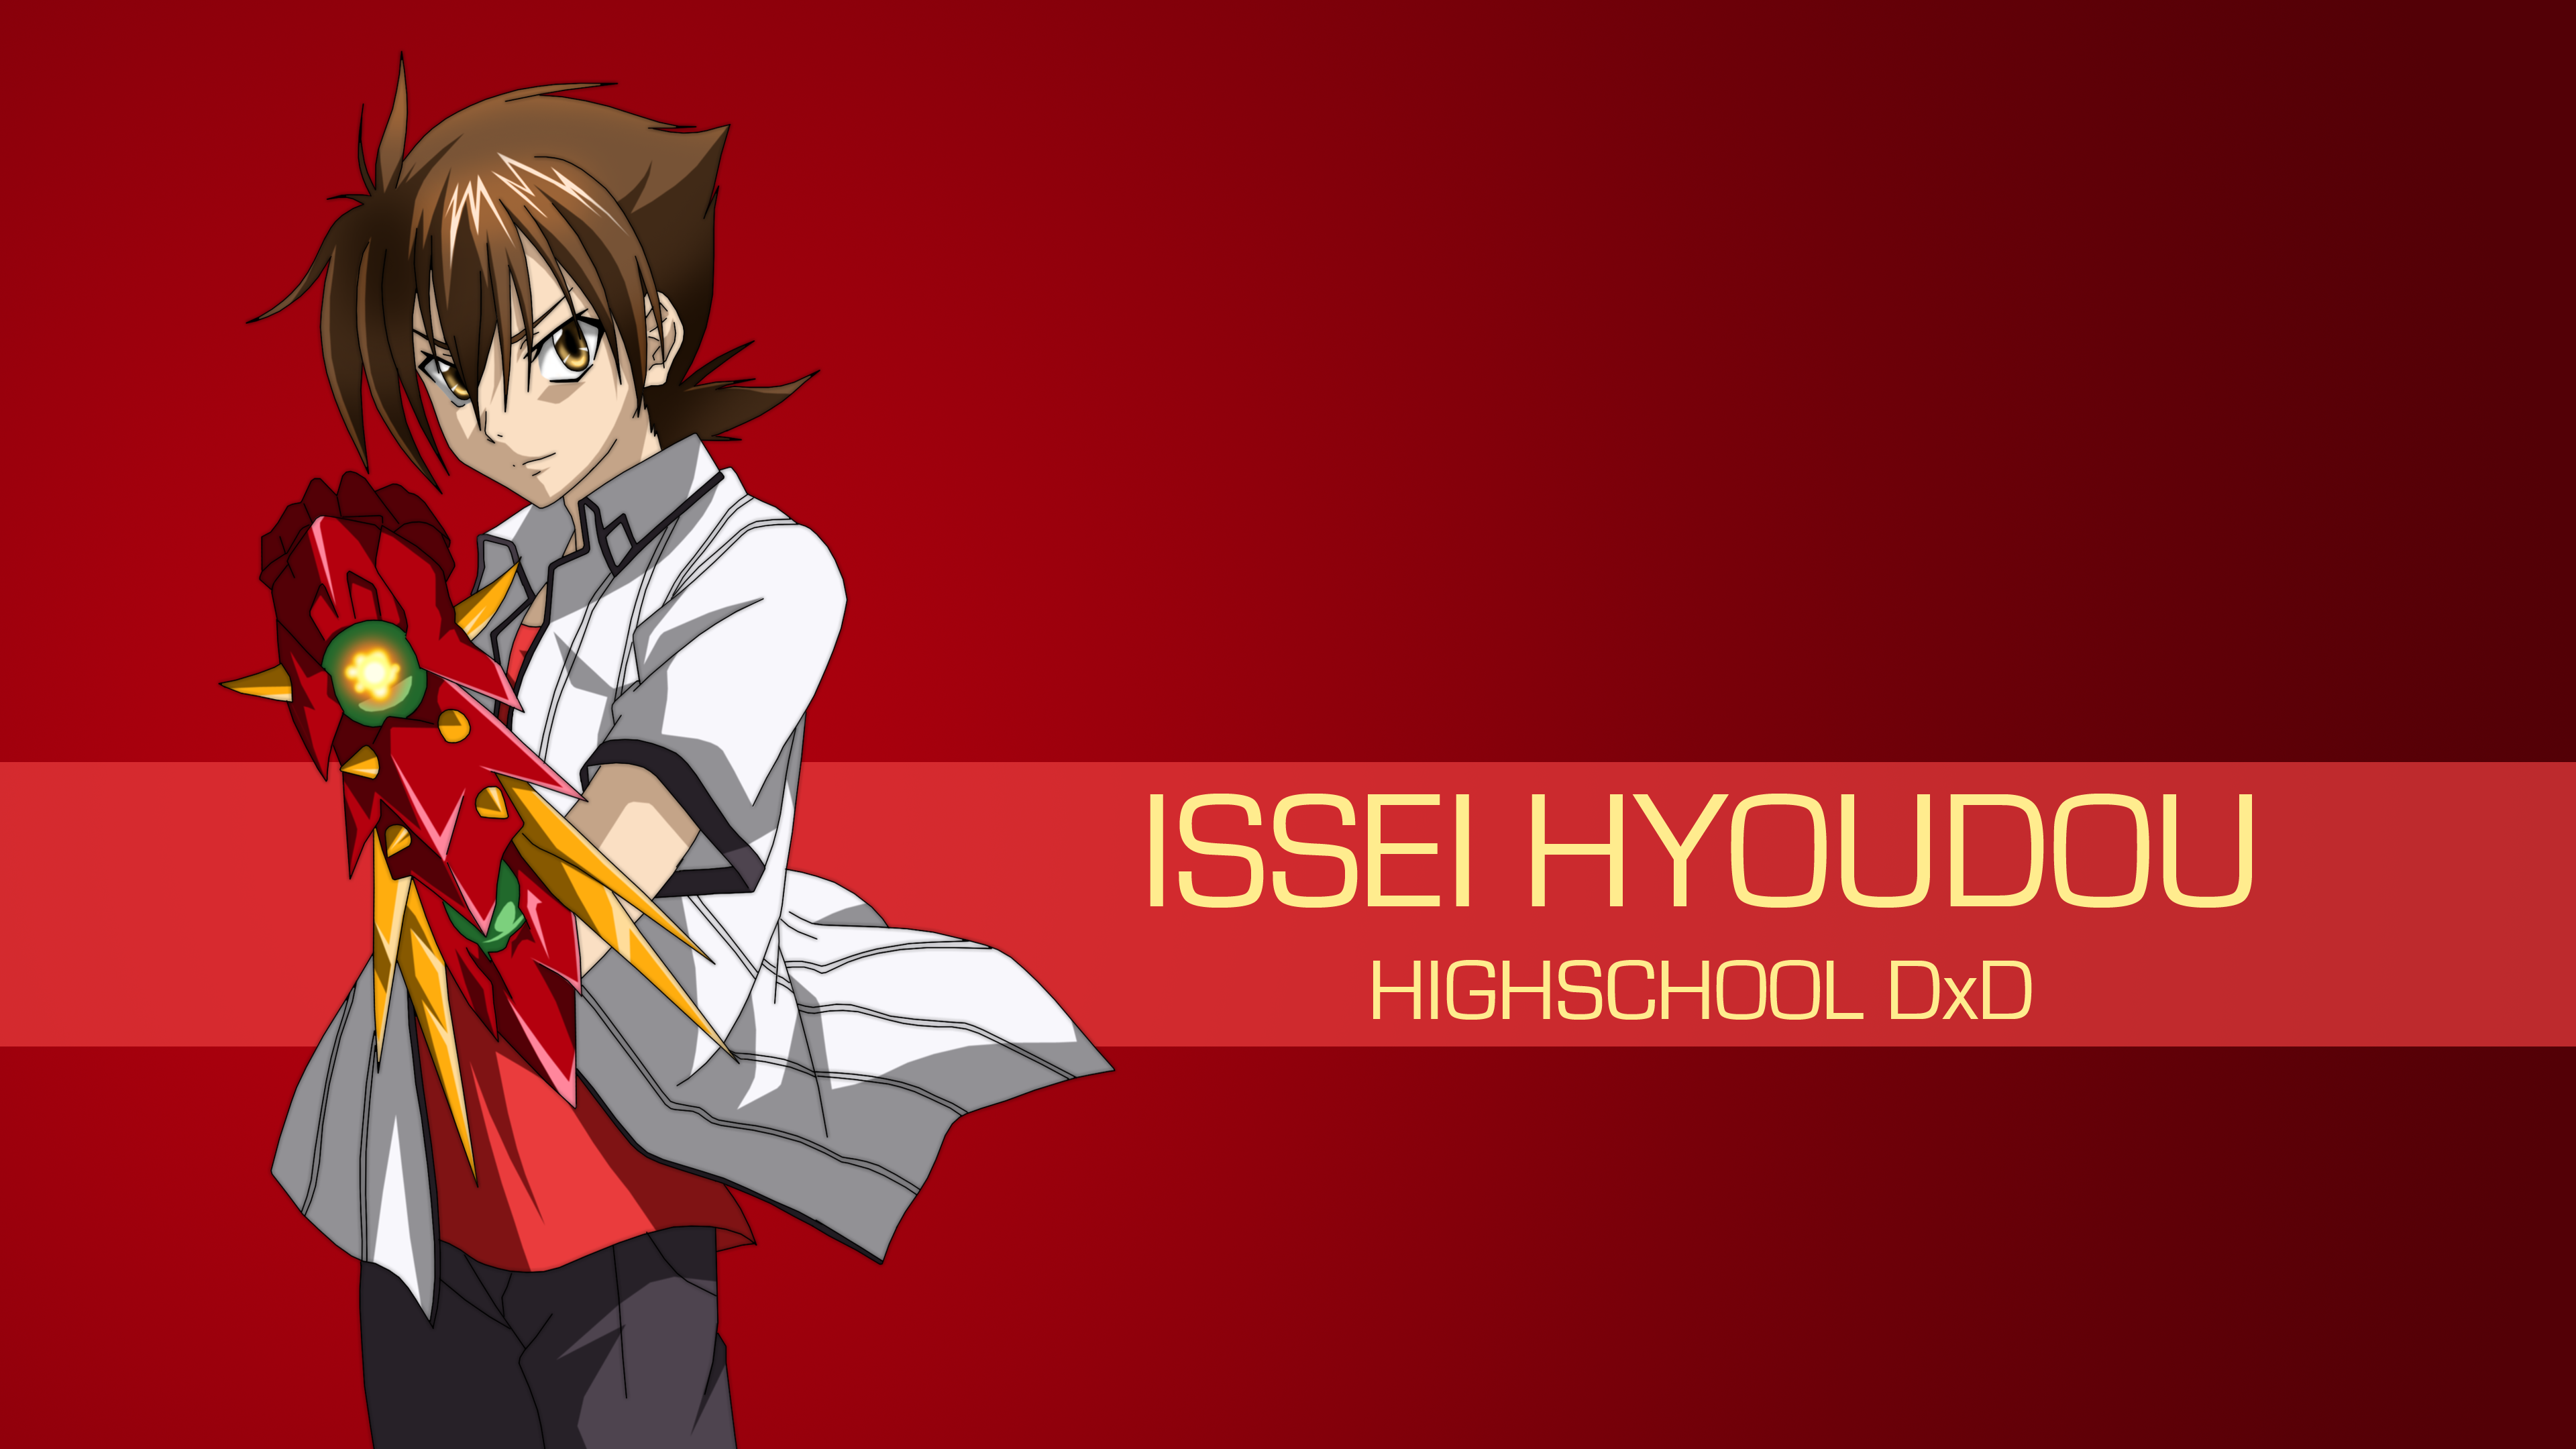 Anime High School DxD Wallpaper